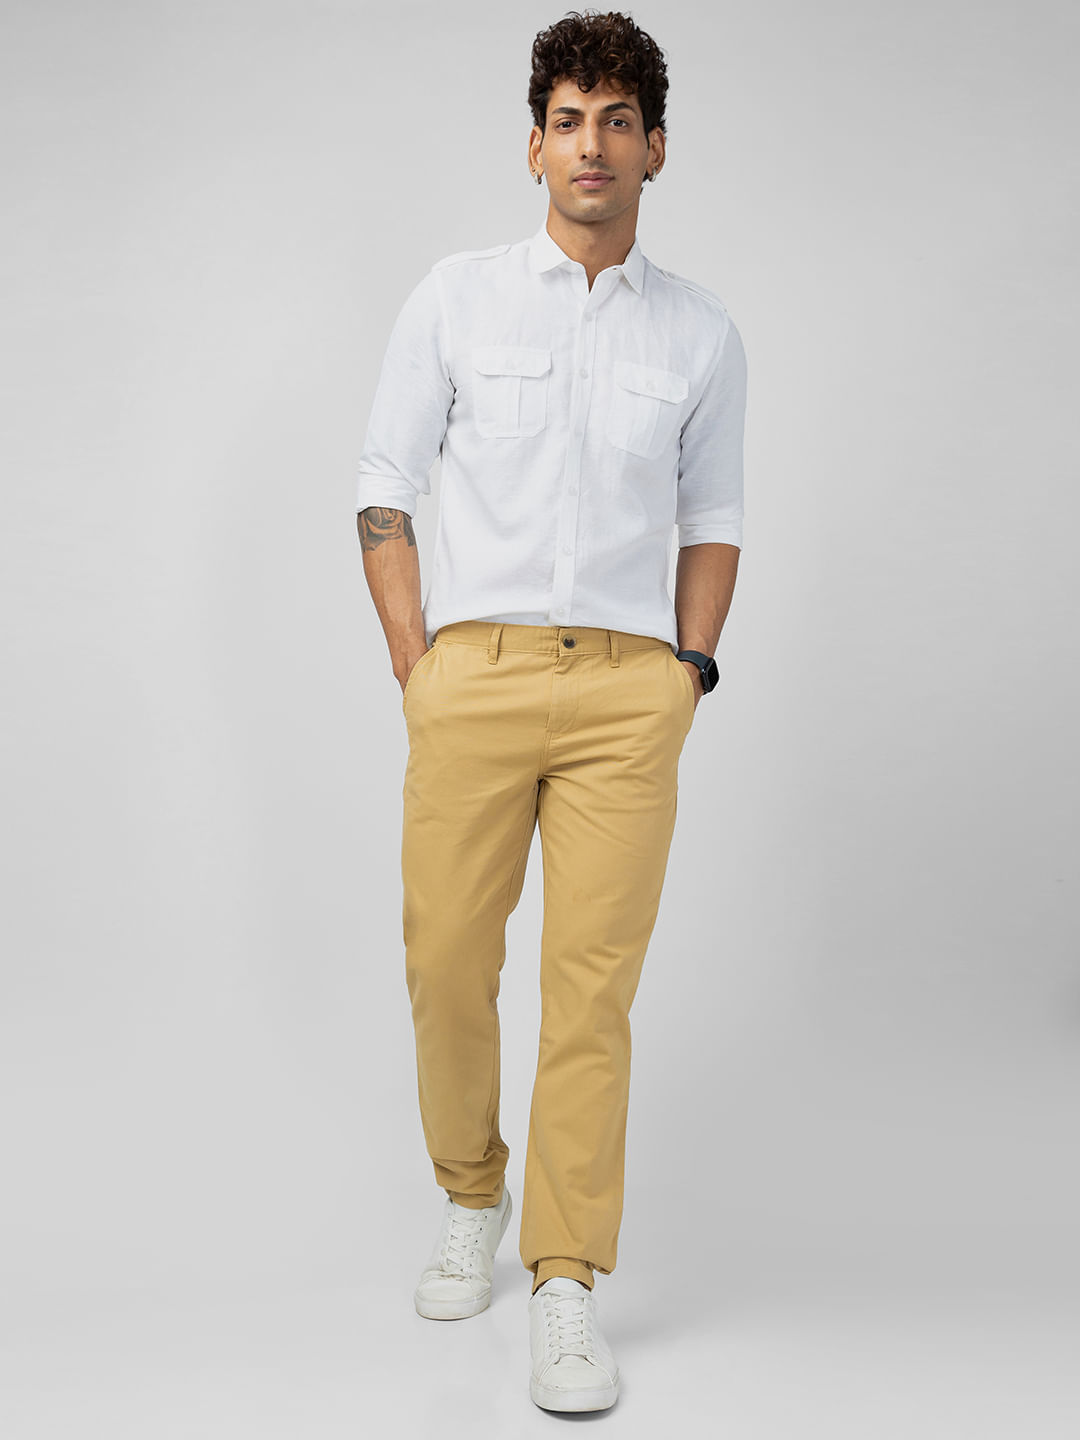 Men Slim fit Khaki Colored Jeans 30W X 30L at Amazon Men's Clothing store